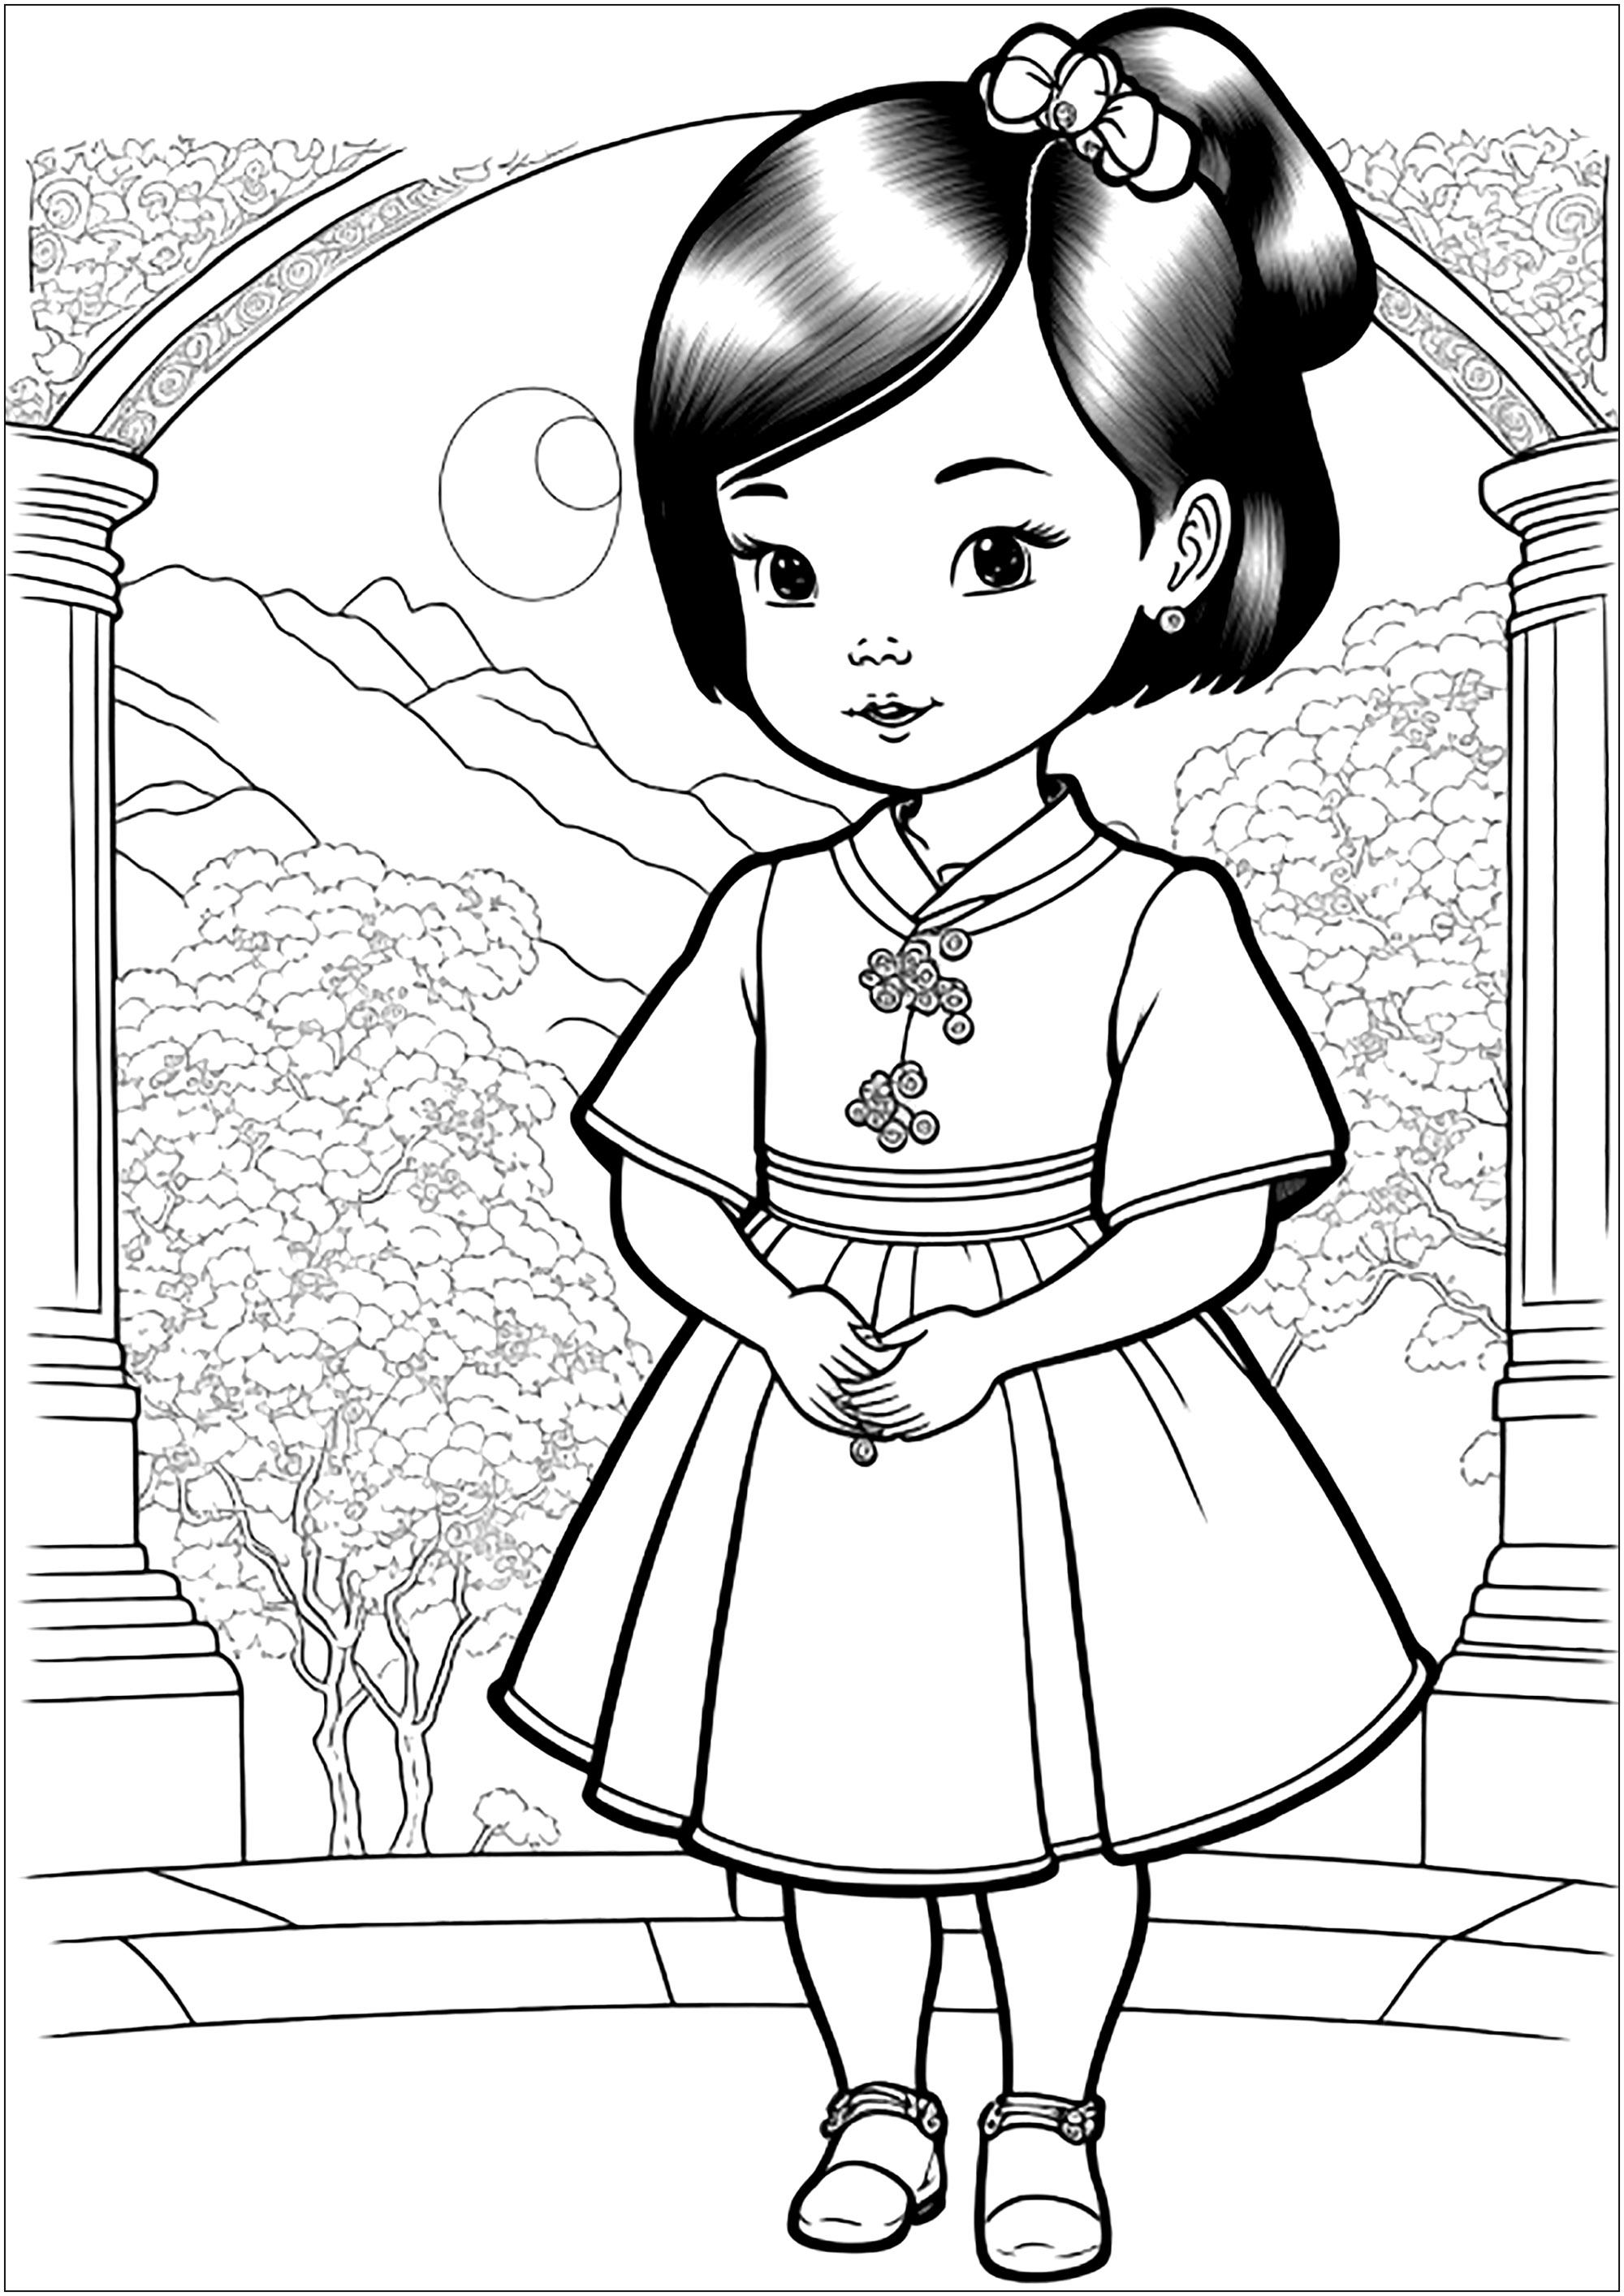 Dibujo para colorear niña china  Dibujos Para Imprimir Gratis  Img 21148